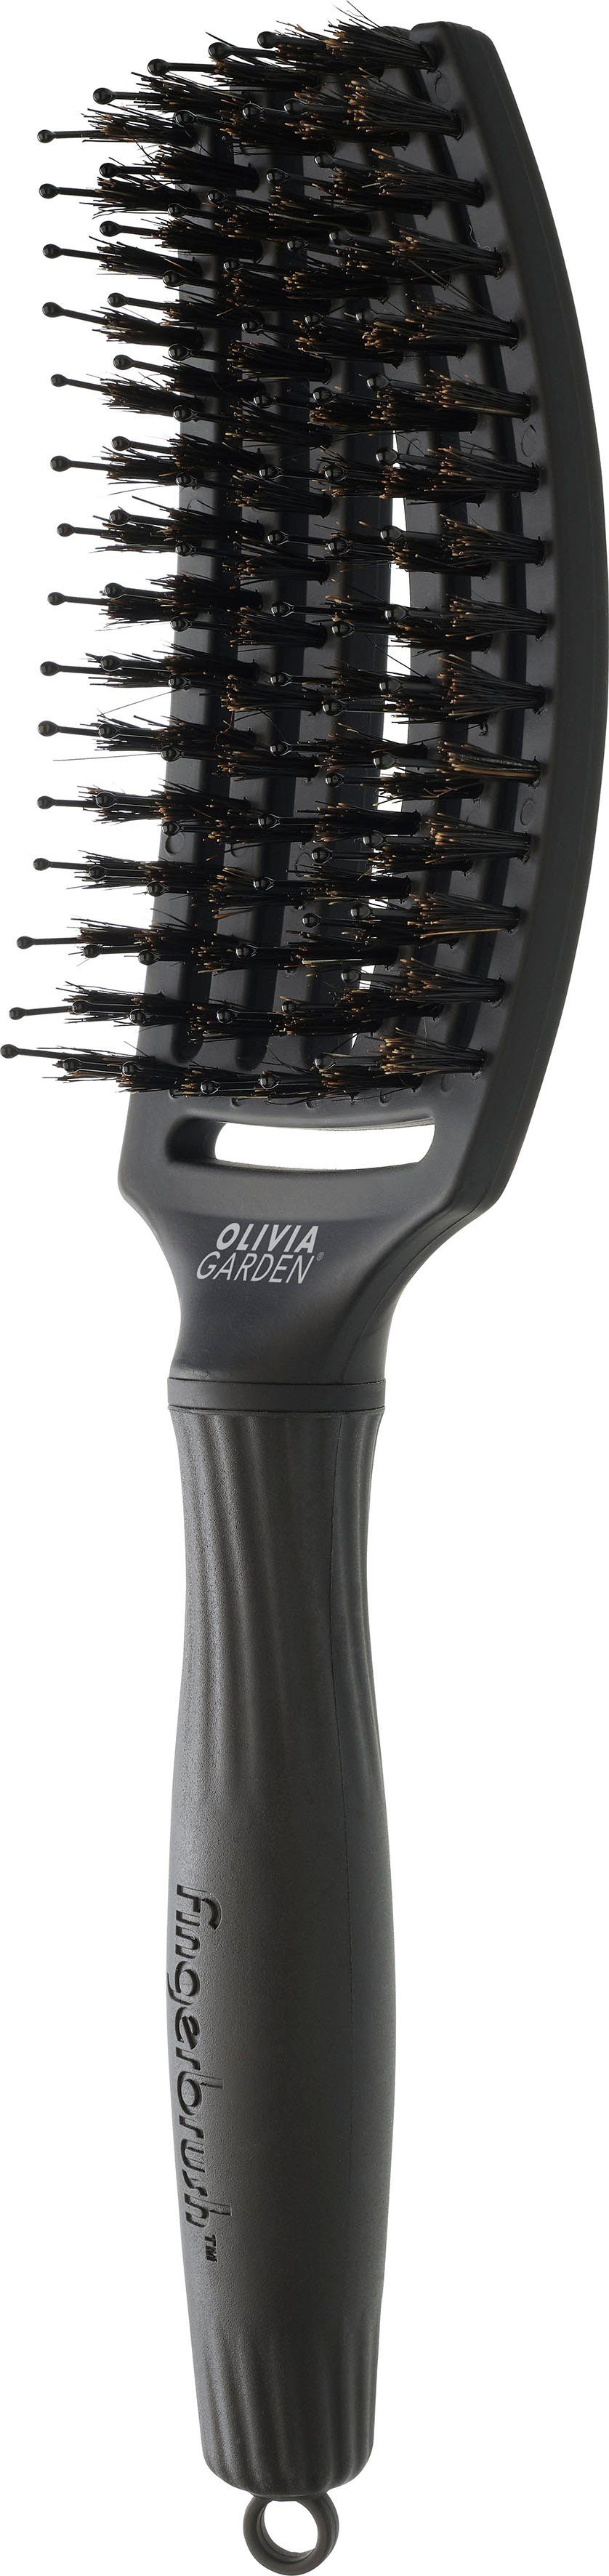 OLIVIA GARDEN Fingerbrush Haarbürste Combo Medium